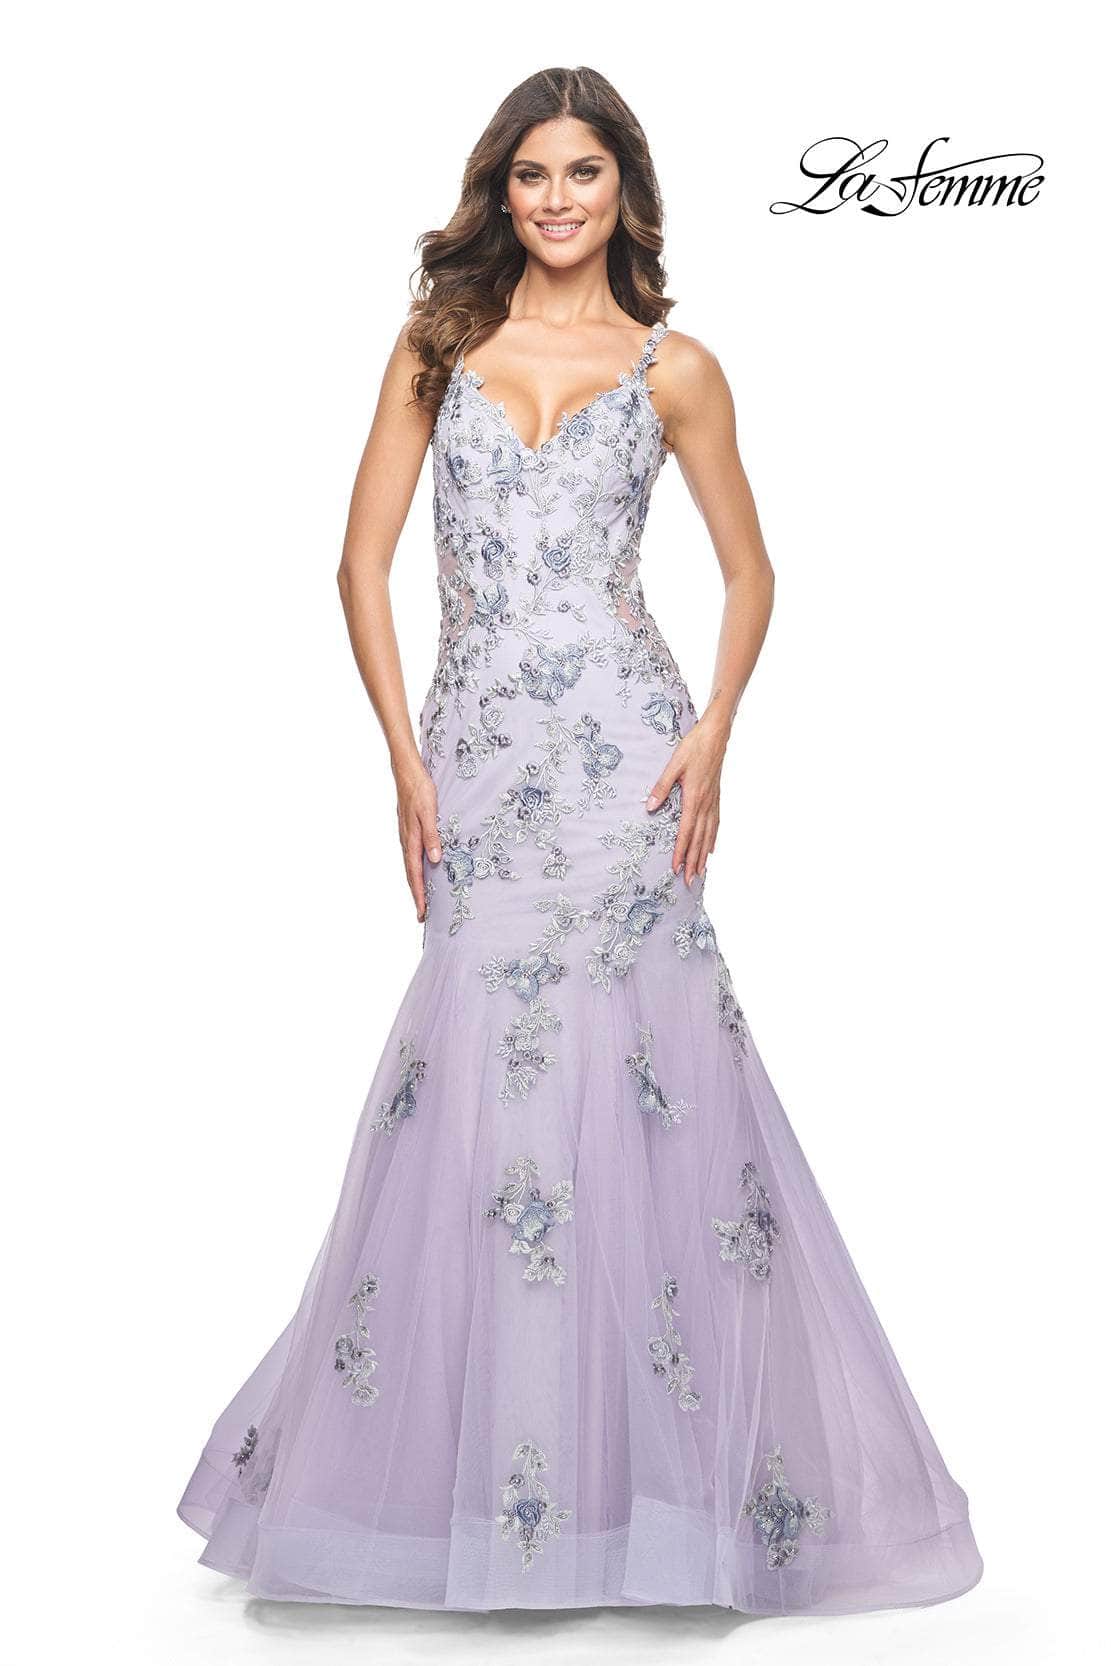 La Femme 32091 - Sleeveless Mermaid Prom Gown
